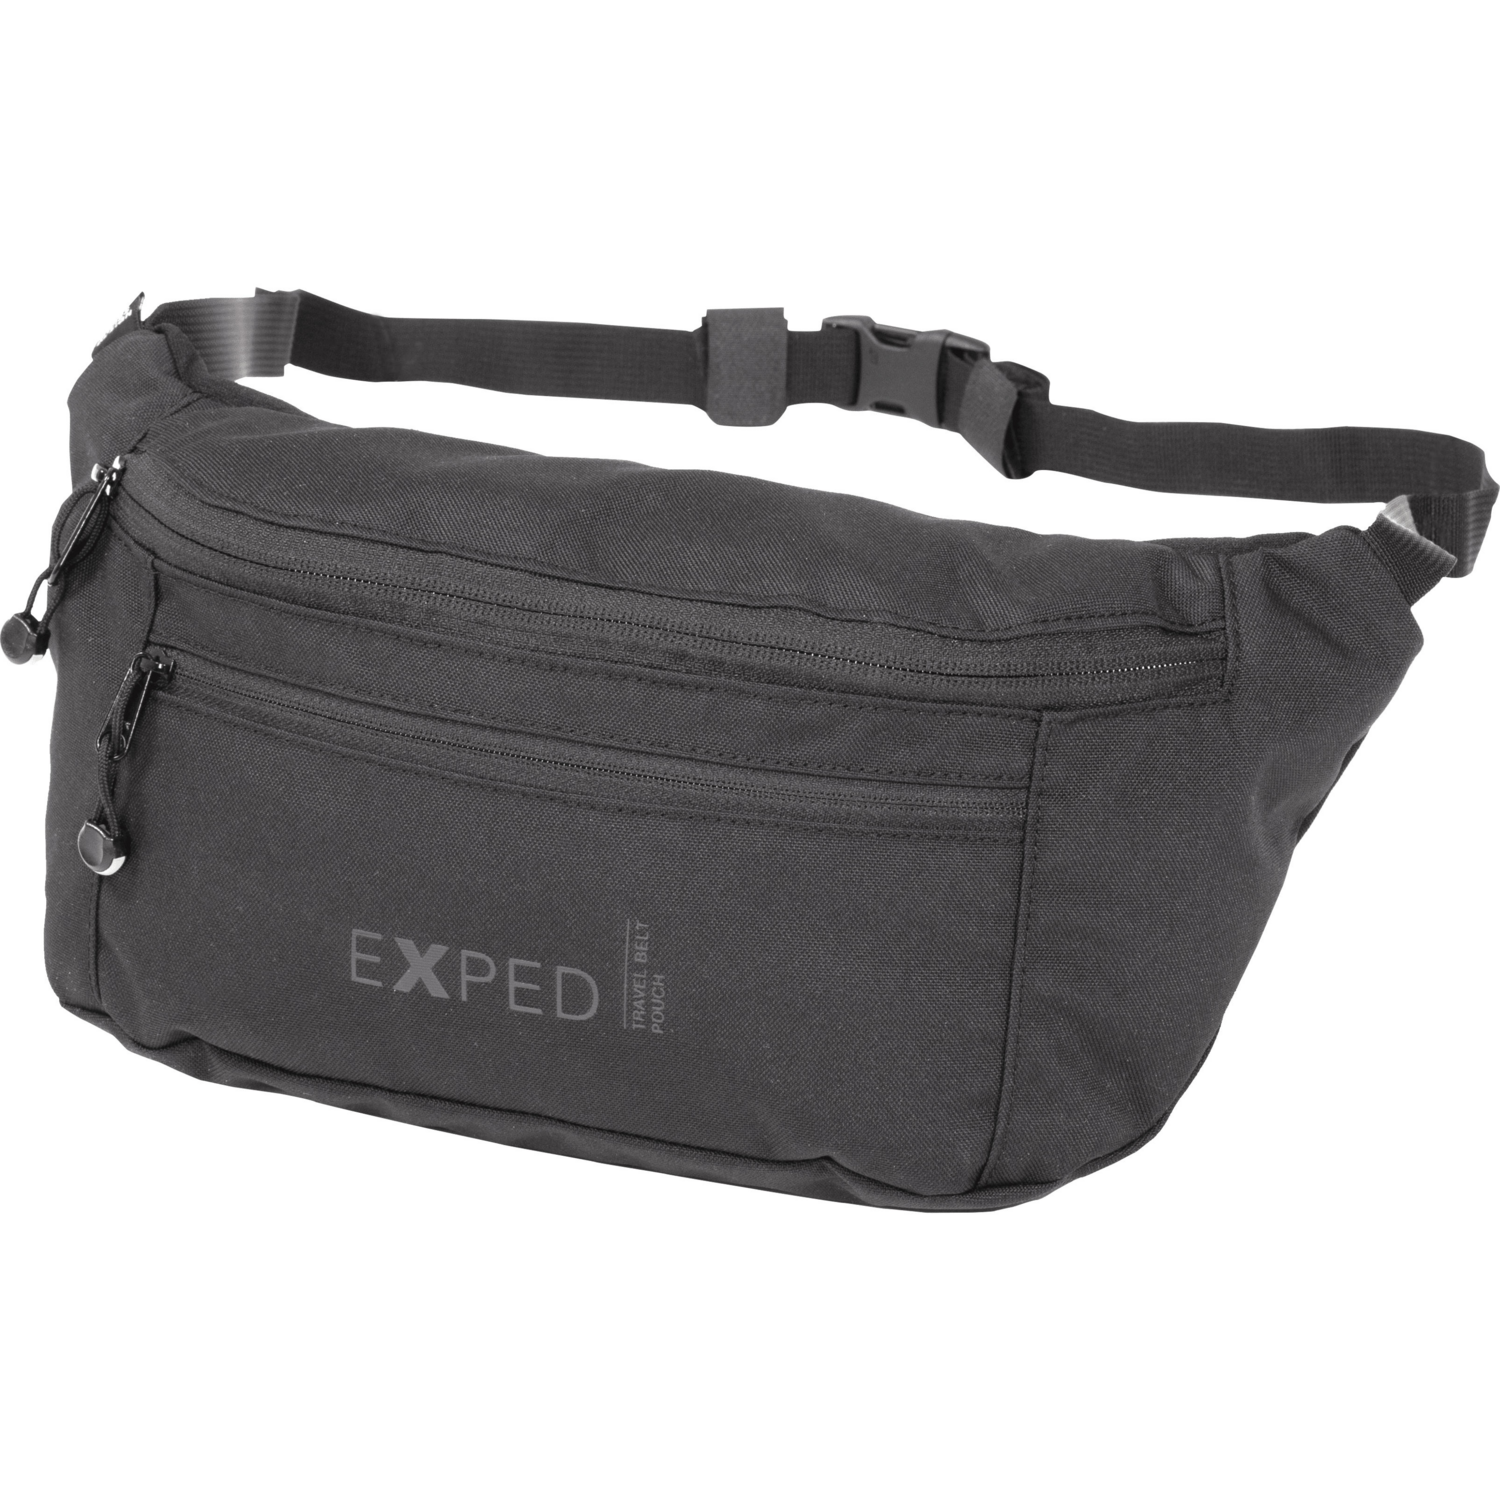 Поясная сумка Exped Travel Belt Pouch black - черный фото 